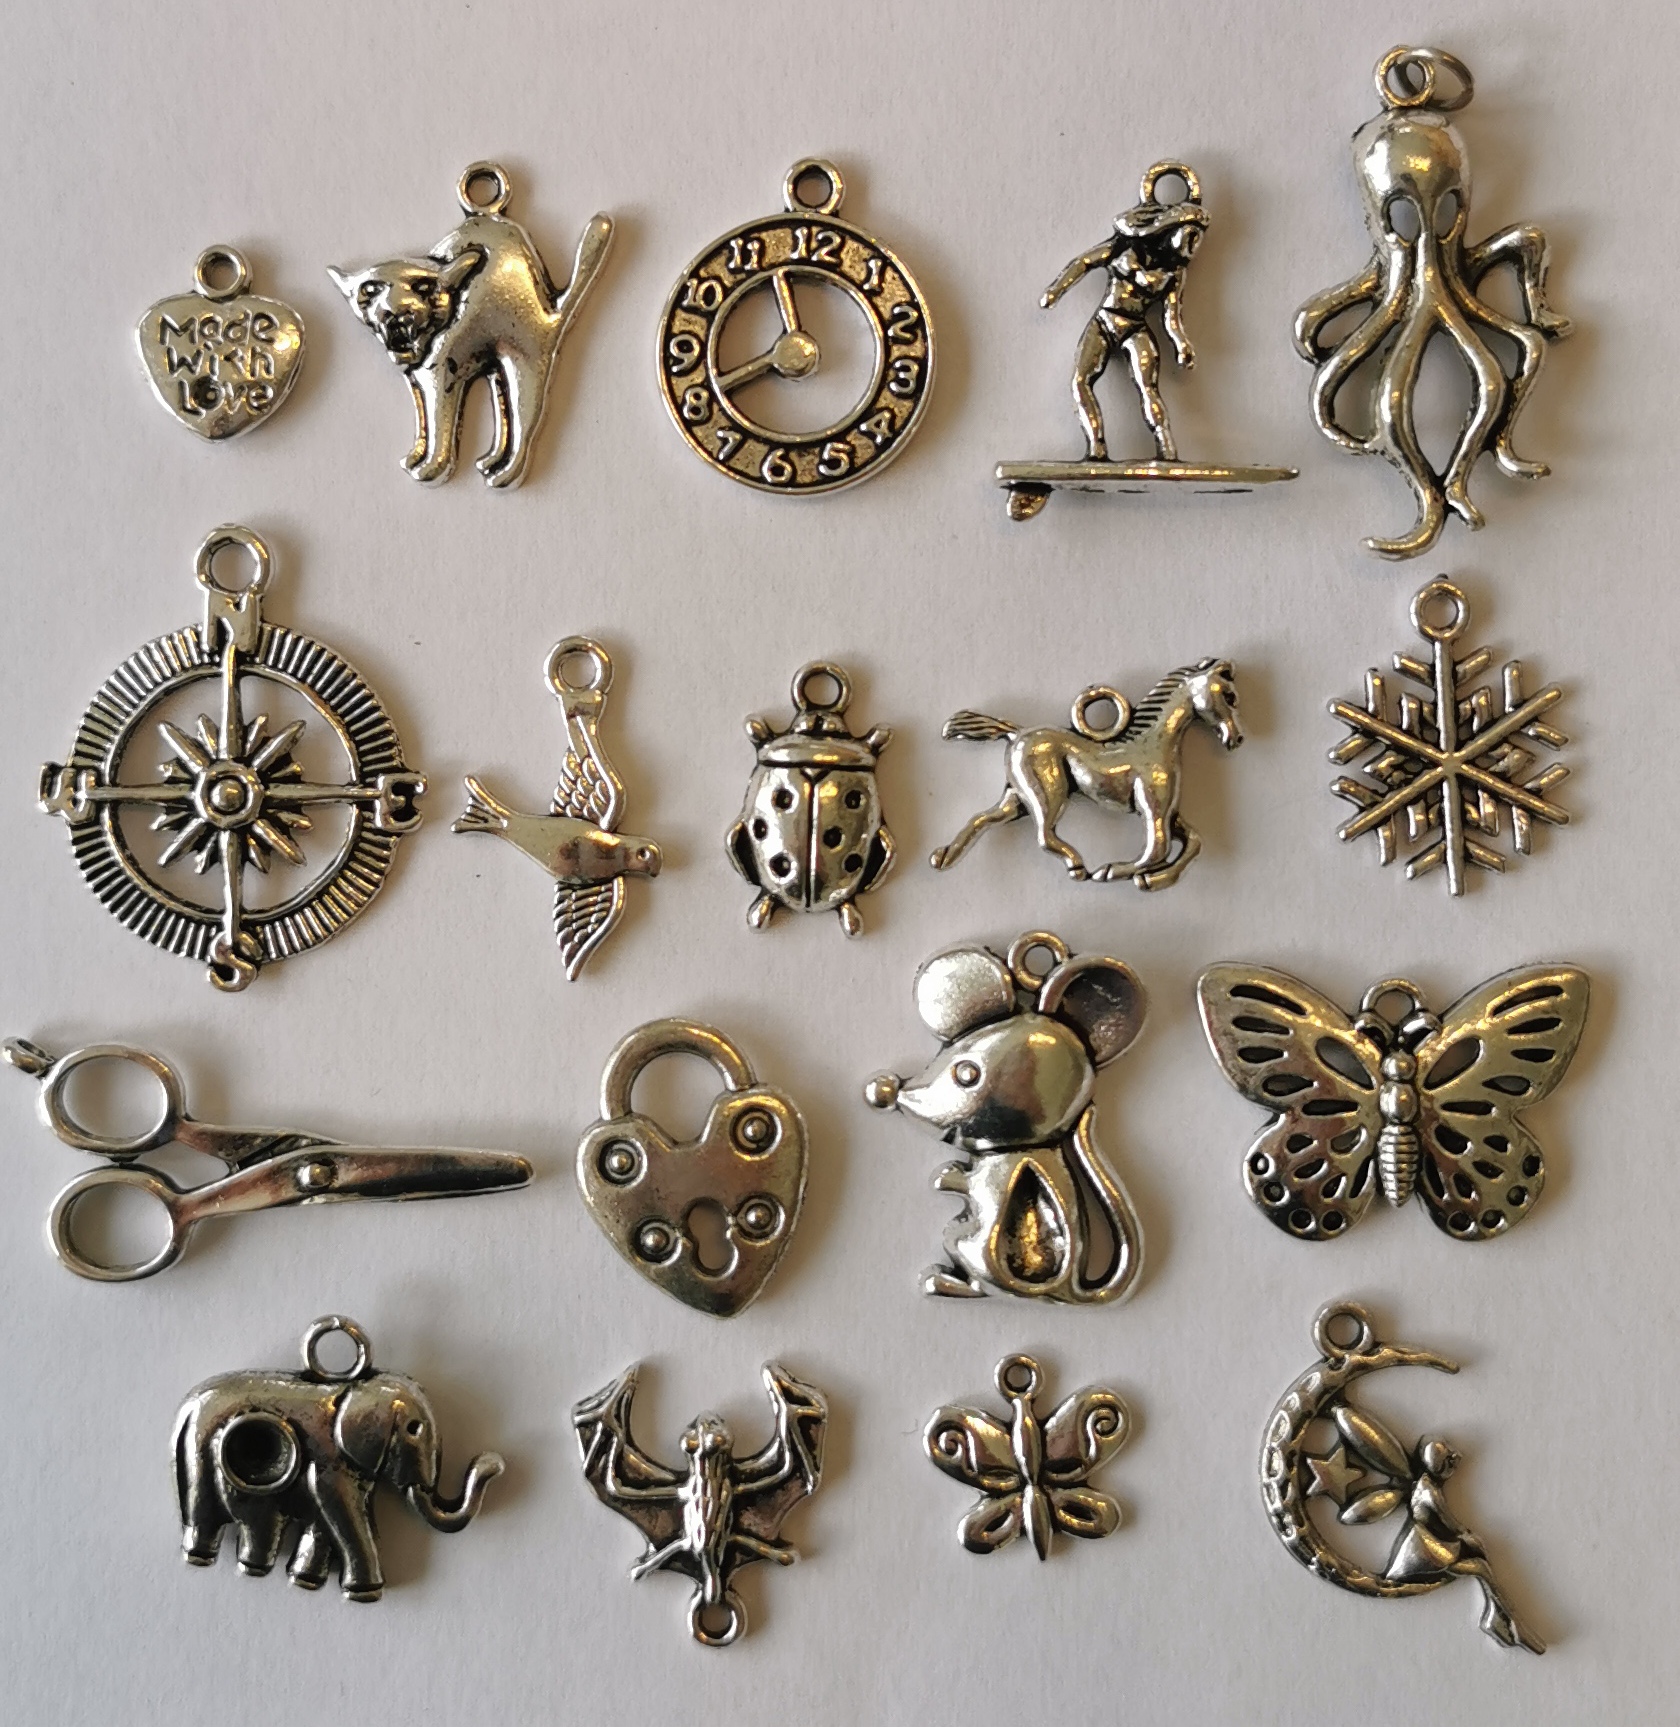 Wholesale Joblot of 100 Metal Jewellery Making Necklace Pendants & Bracelet Charms 